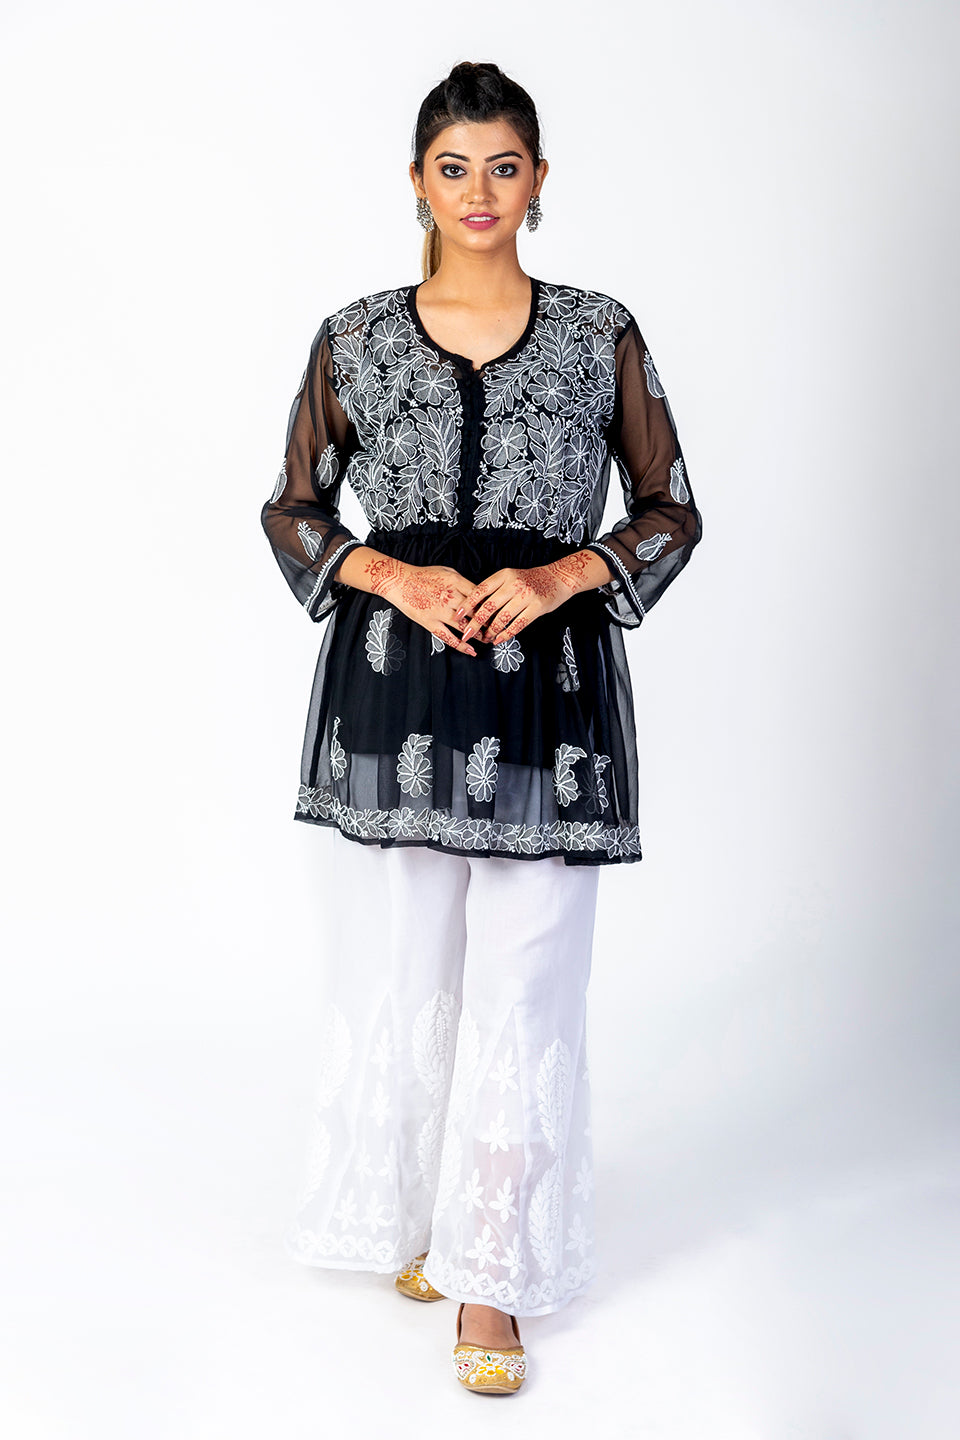 Nazaqat Women's Lucknow Pure Cotton Chikankari Short Length Kurti Top Base  Color White at Rs 275 | Chikan Kurtis in New Delhi | ID: 22247901148